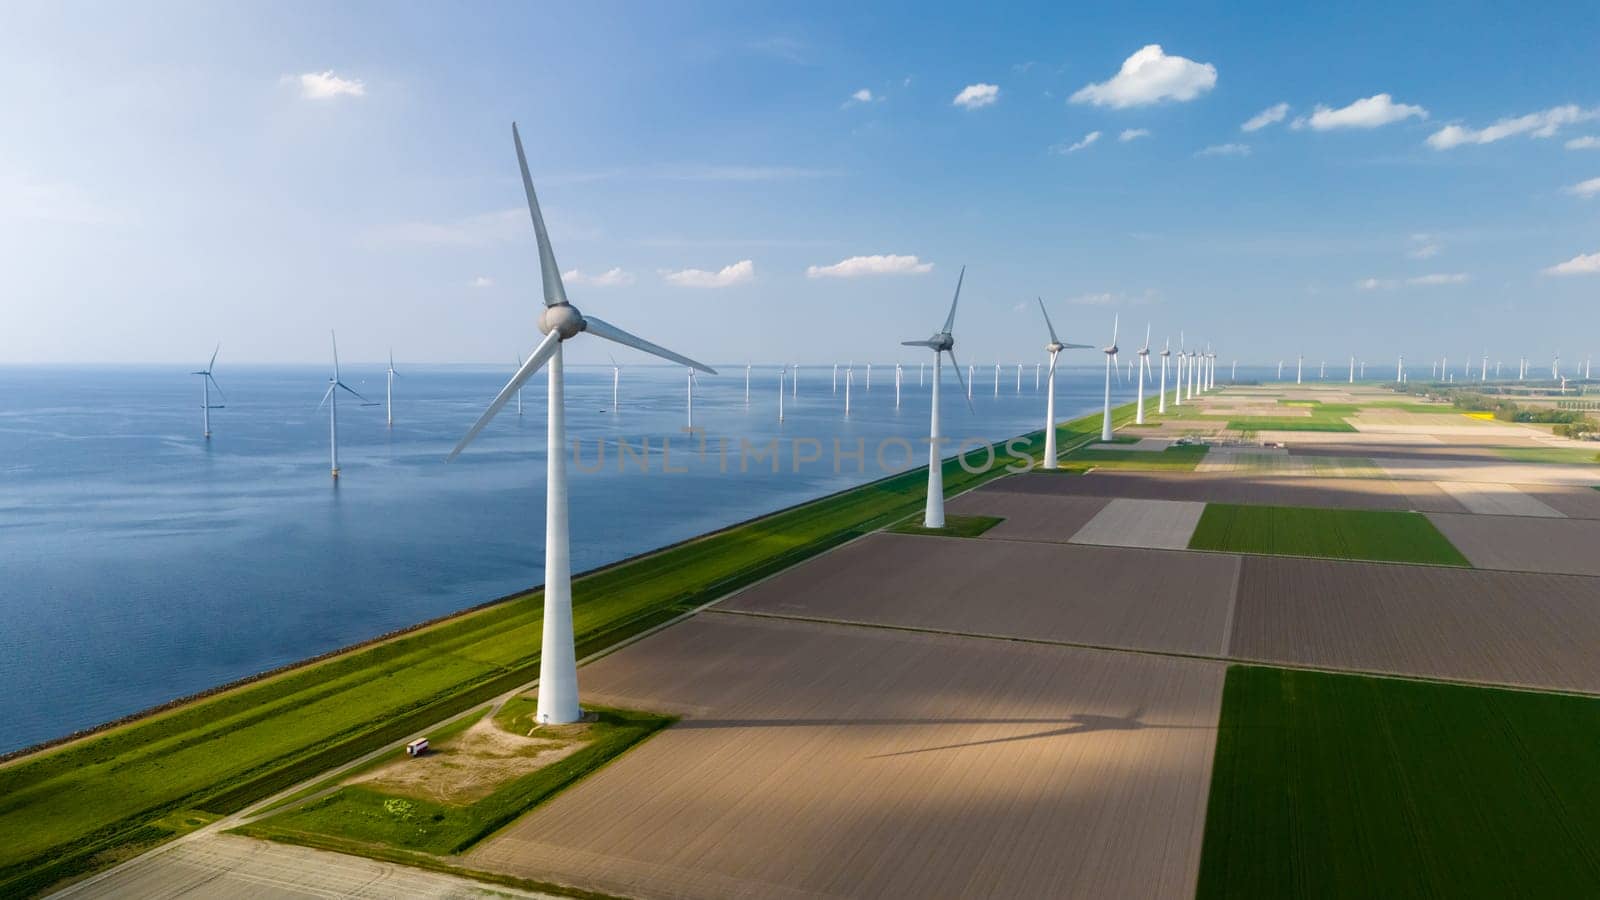 A mesmerizing aerial view of a wind farm in Flevoland, Netherlands, where windmill turbines rhythmically generate clean energy near the ocean.